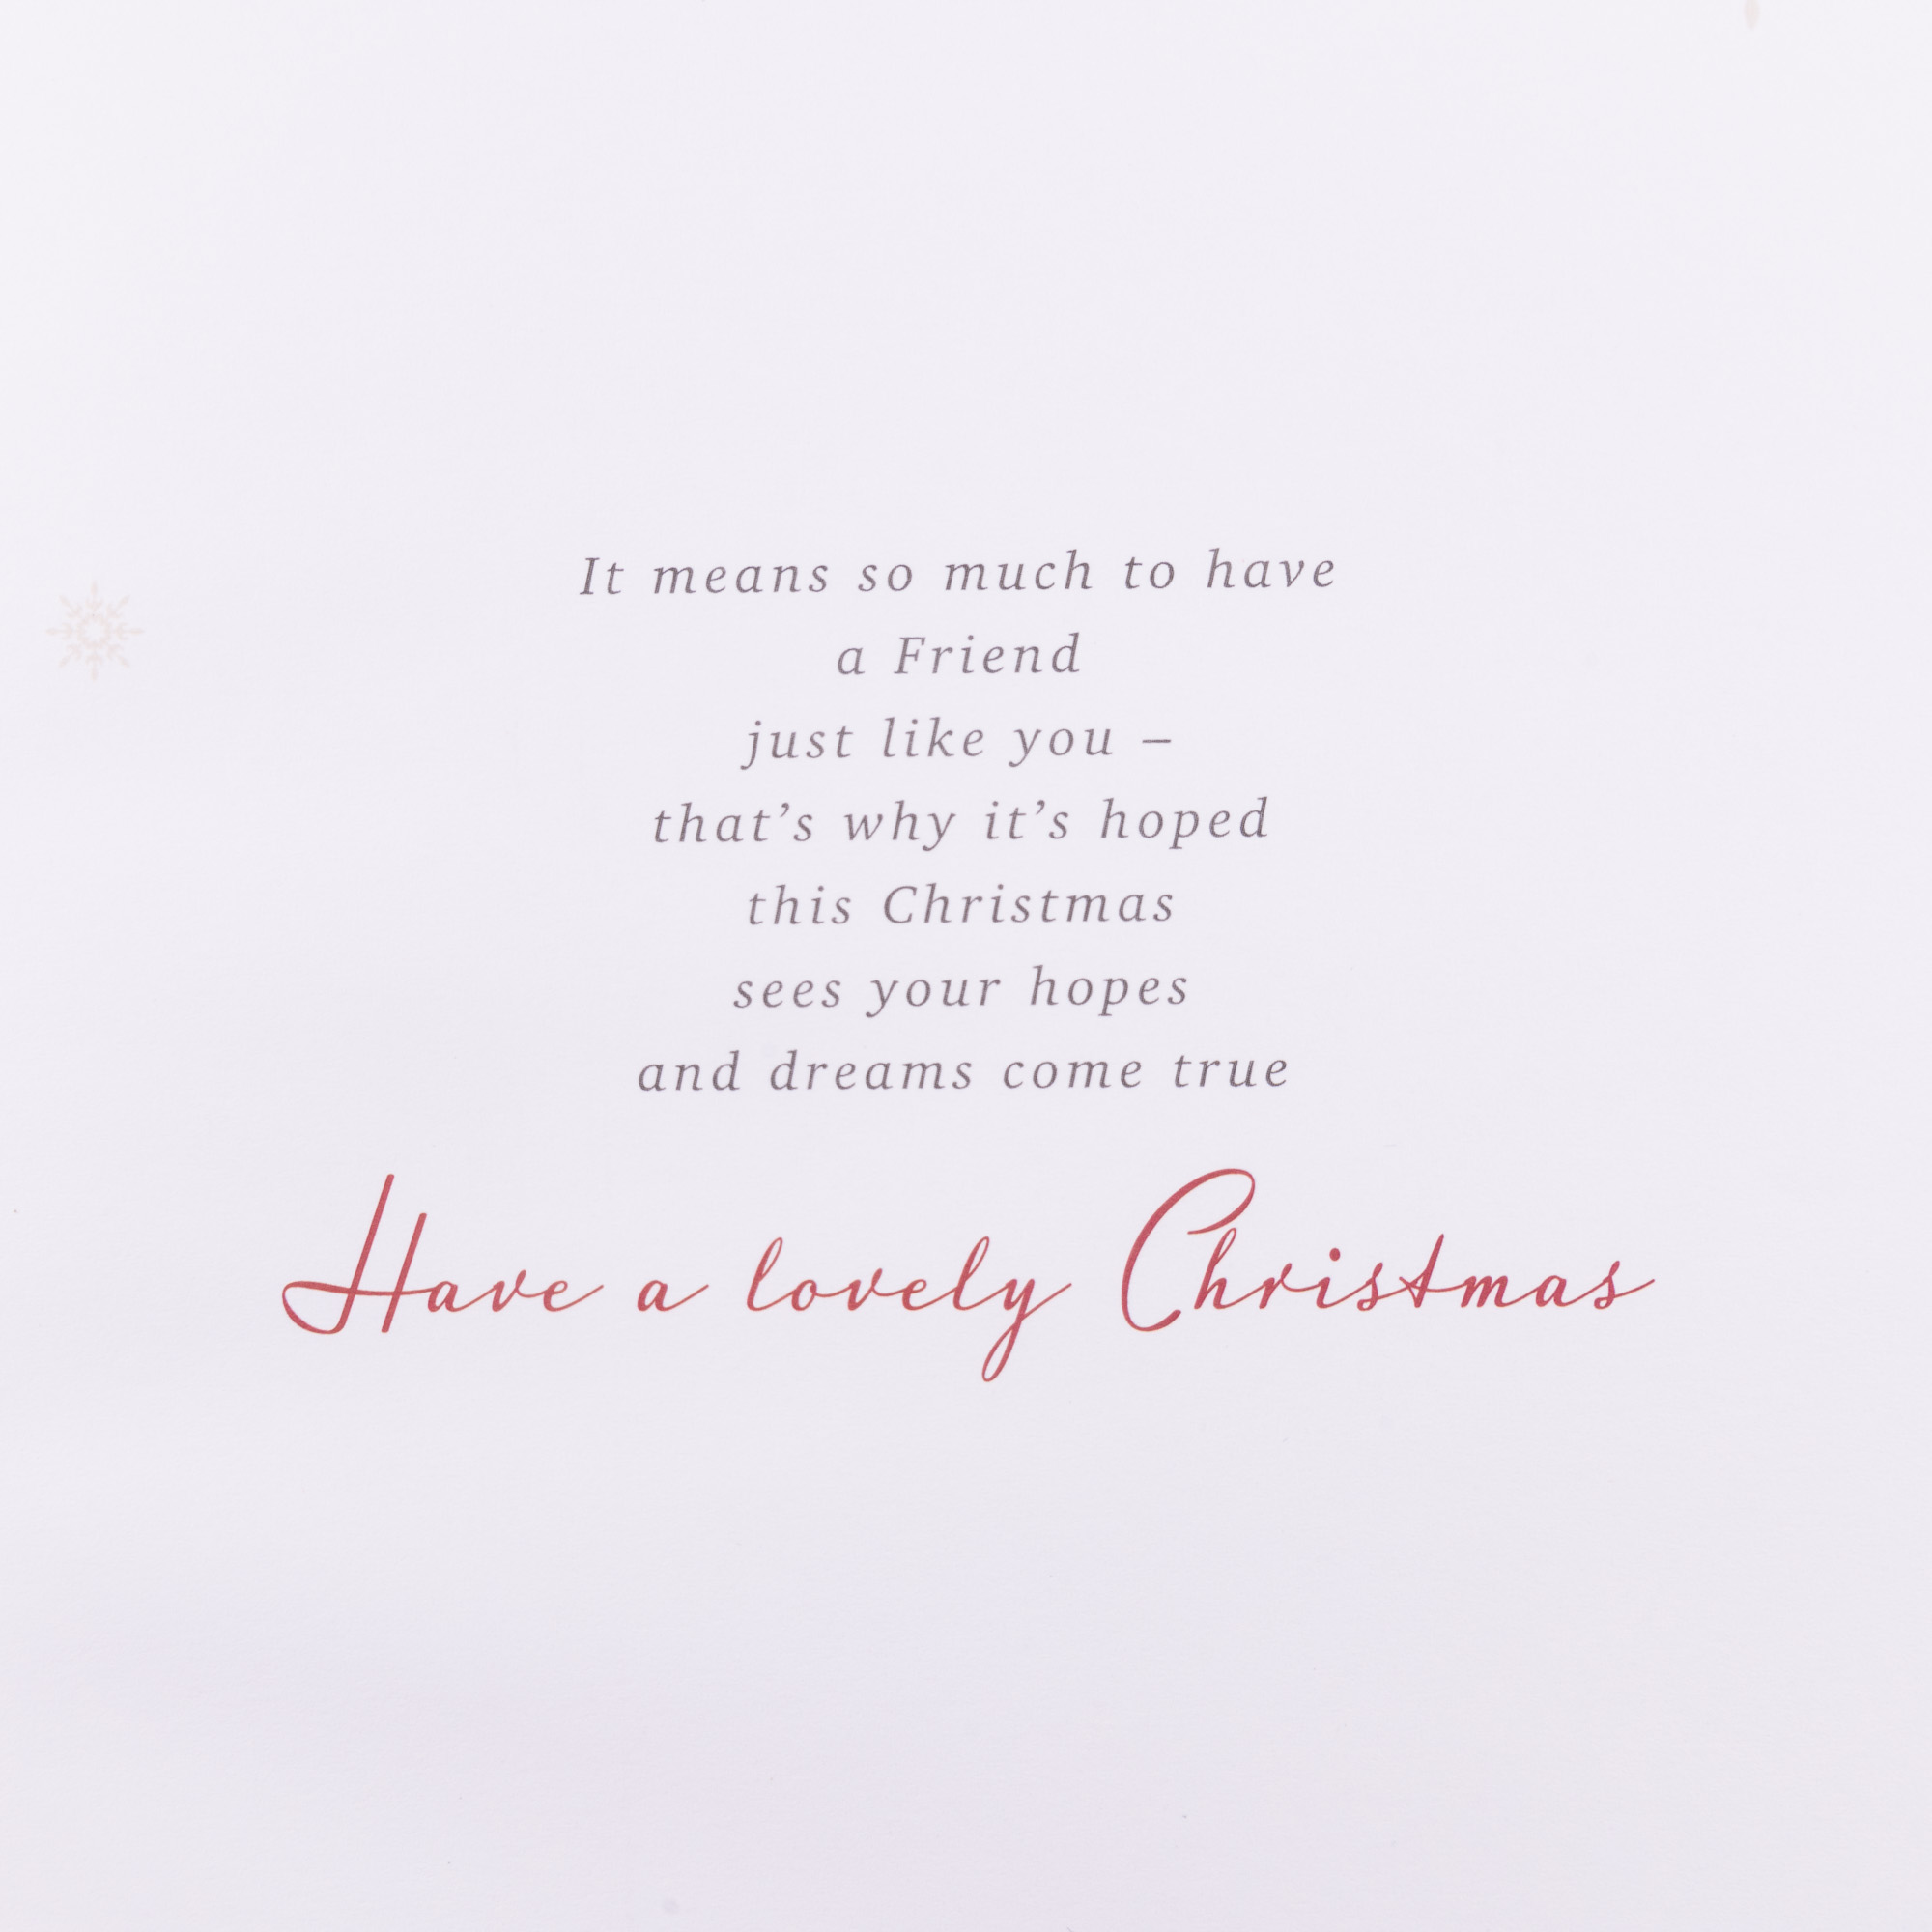 Christmas Card - Wonderful Friend, Fireside At Christmas